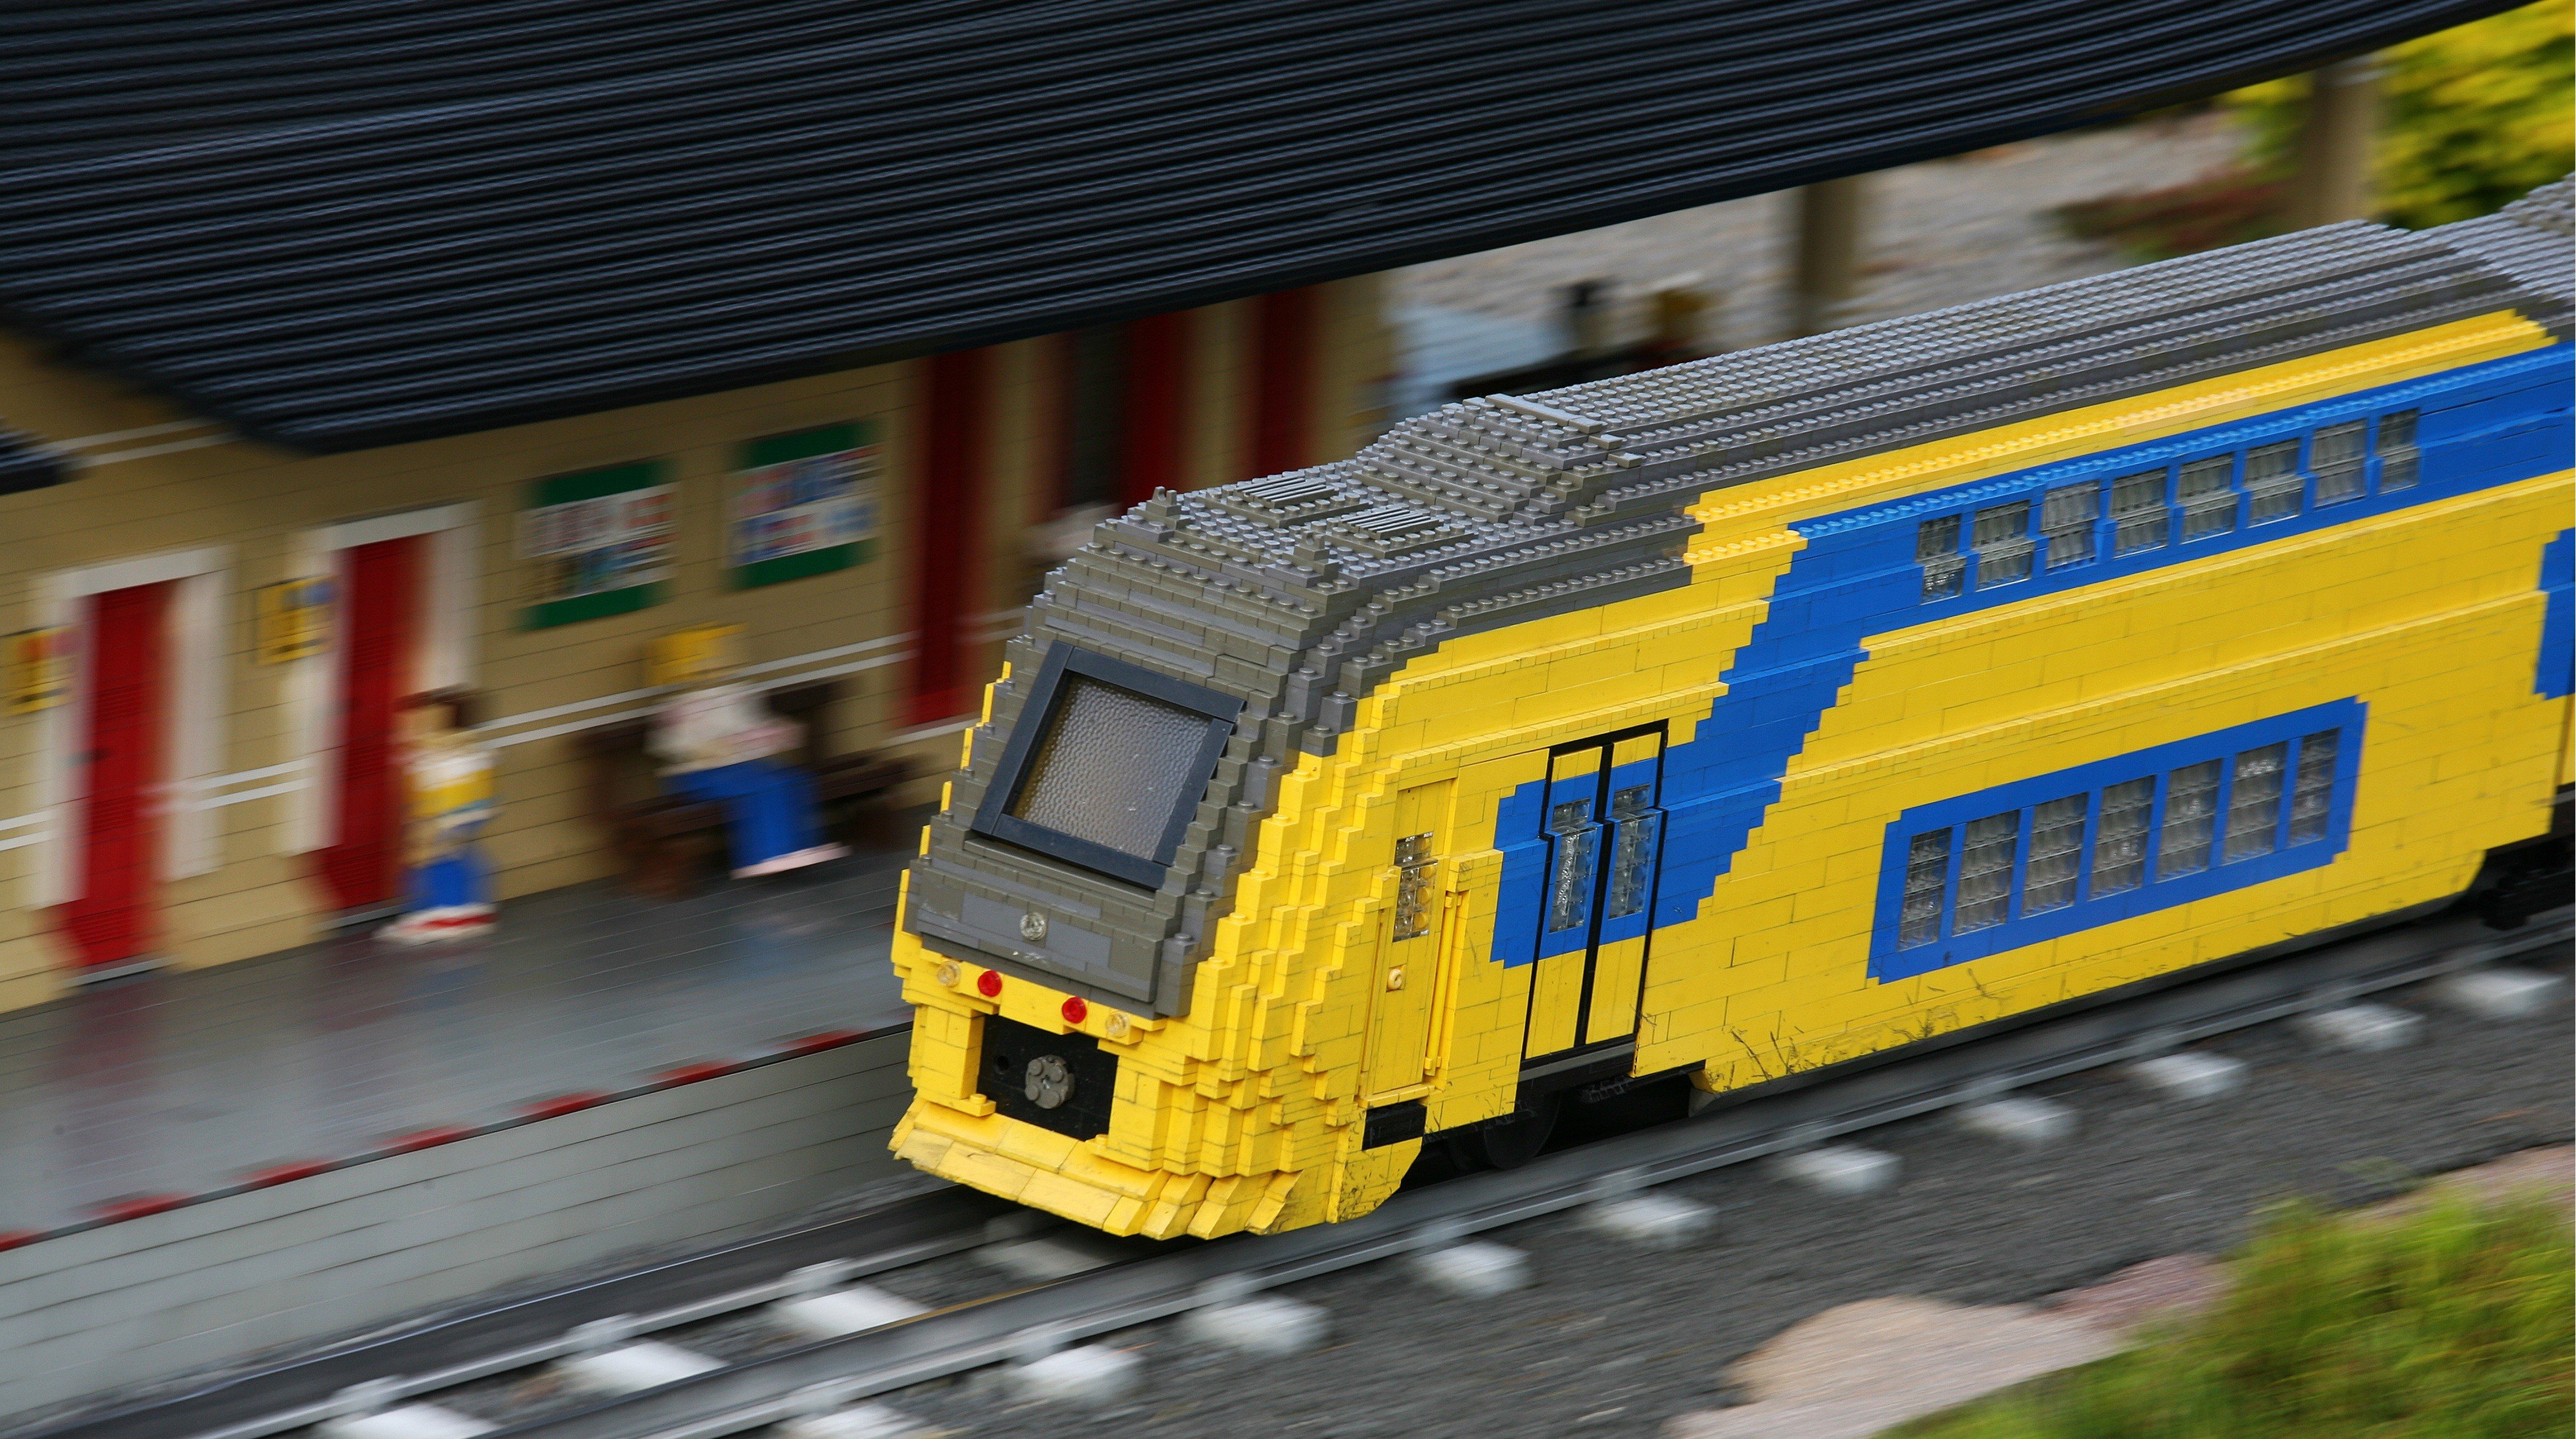 LEGO, Toys, Bricks, Train, Diesel locomotive, Train station, Railway, Railway station, Blurred, Motion blur Wallpaper